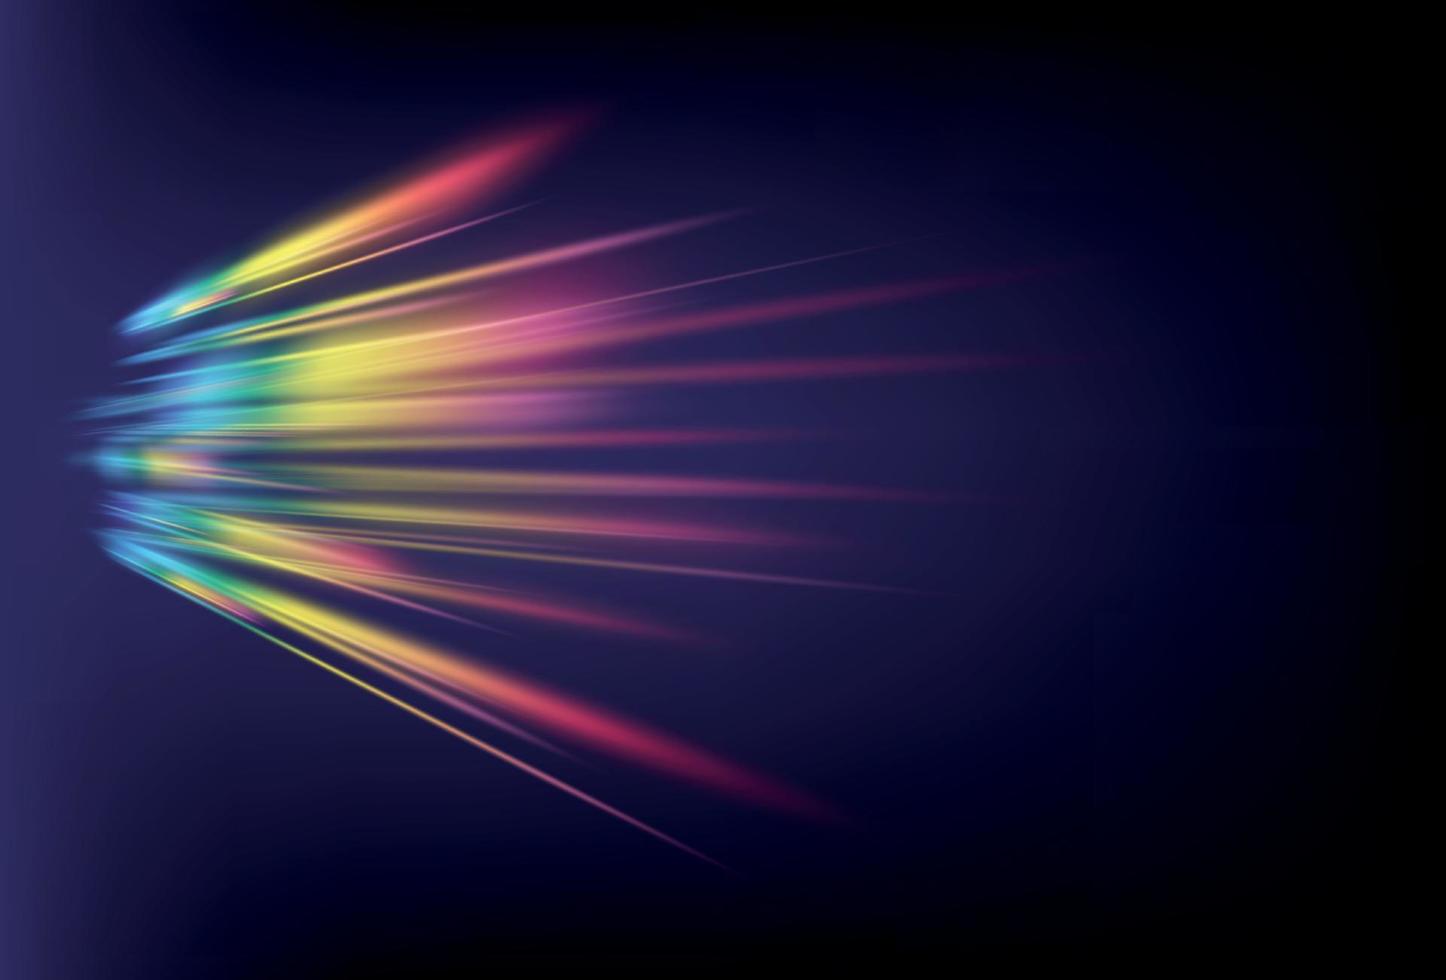 Prism, prism texture. Crystal rainbow lights vector